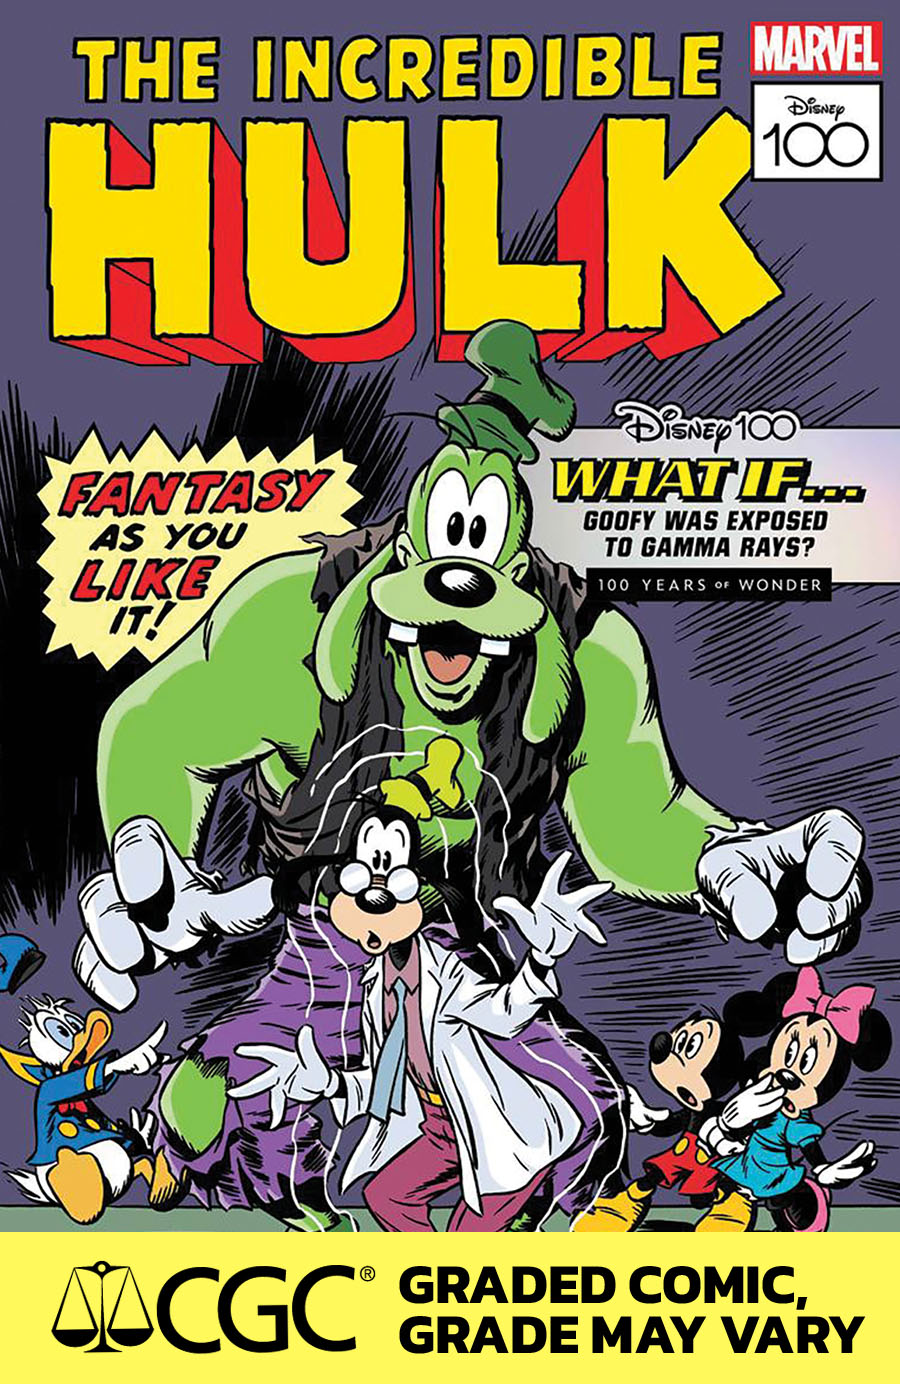 Amazing Spider-Man Vol 6 #21 Cover F DF Vitale Mangiatordi Disney100 Incredible Hulk 1 Homage Variant Cover CGC Graded